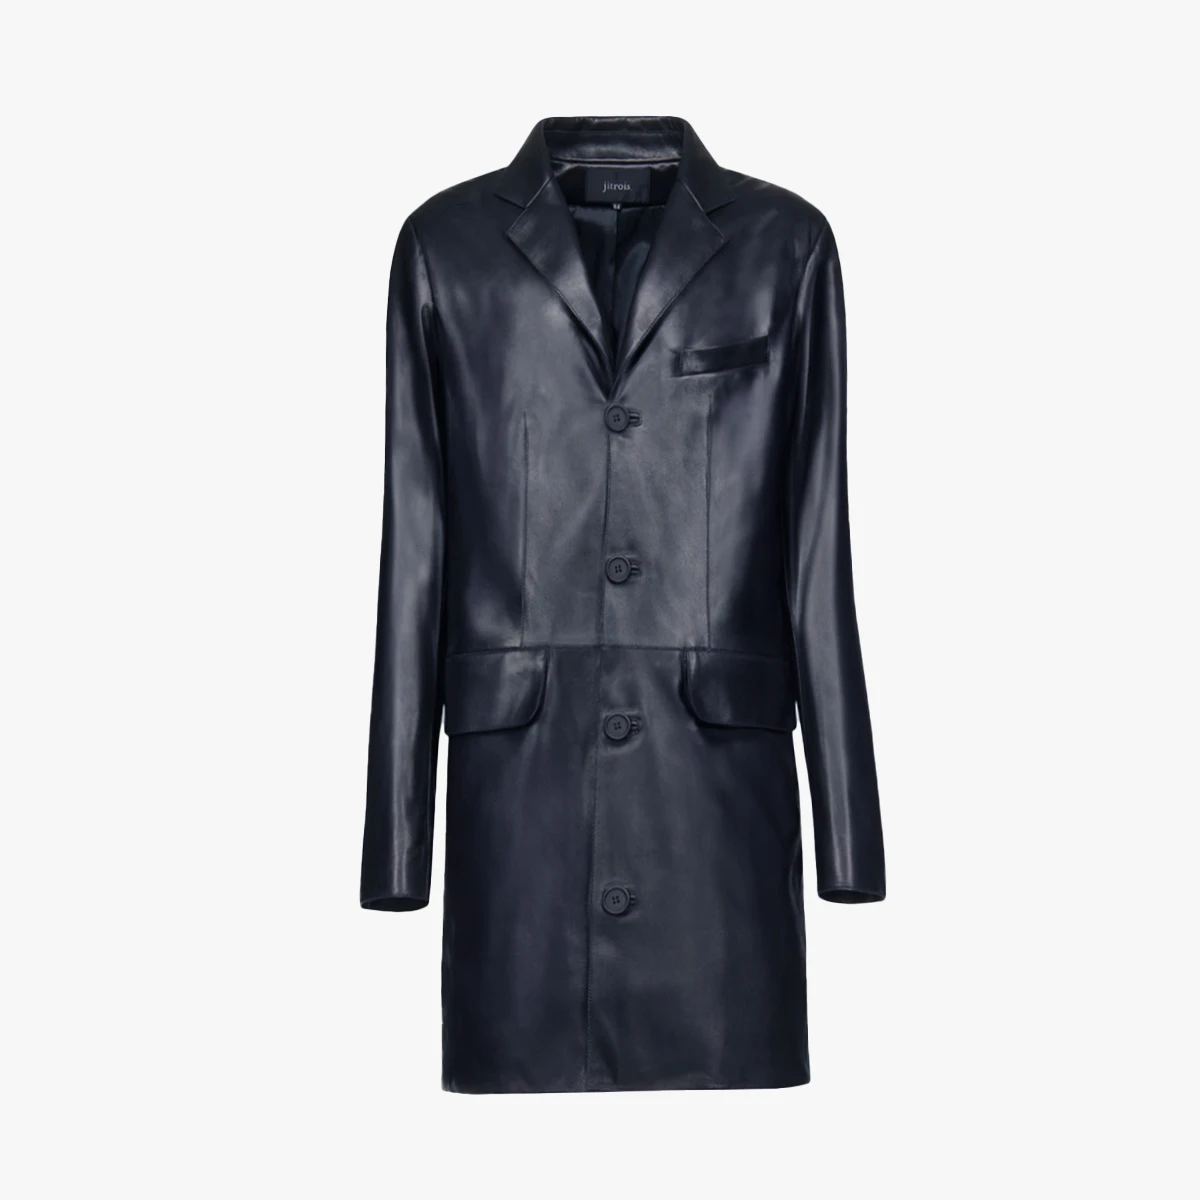 Men trench coat genuine lambskin leather long winter knee length jacket  coat